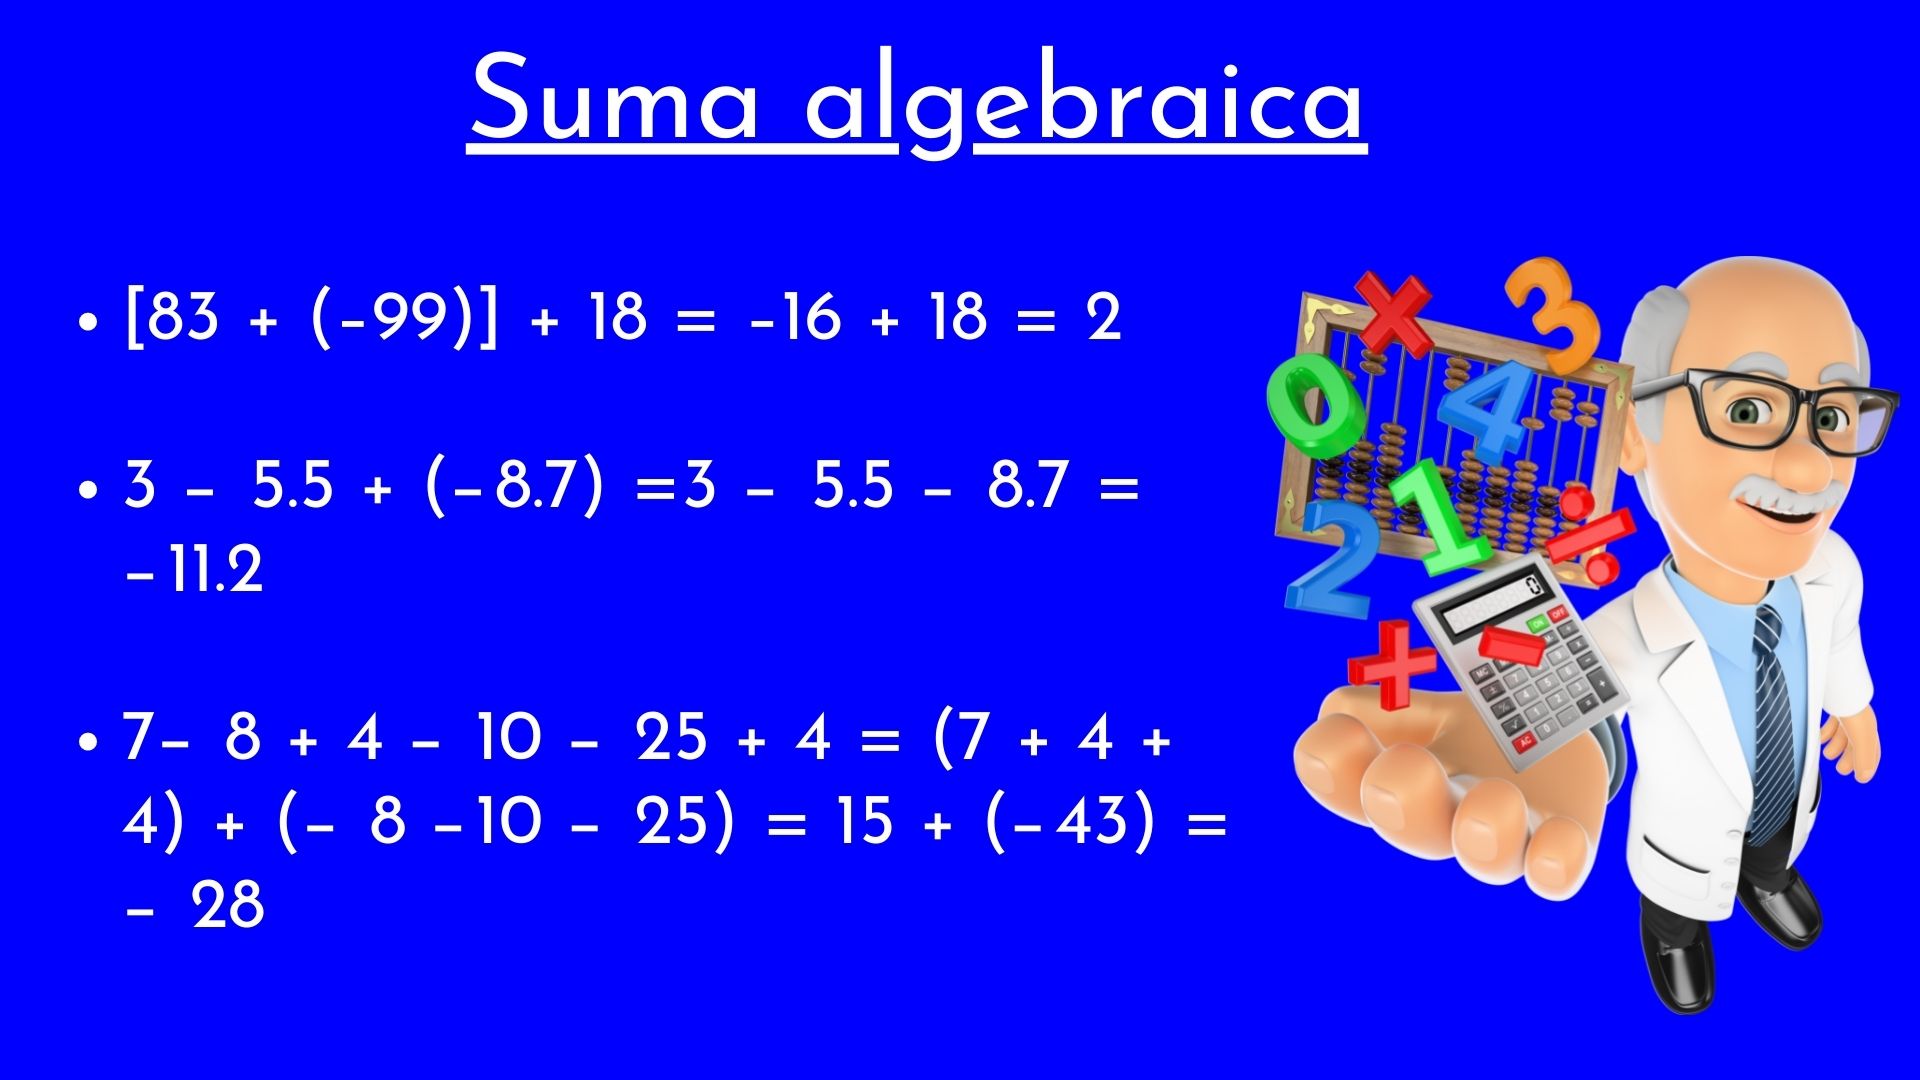 ¿Cuál es la suma algebraica